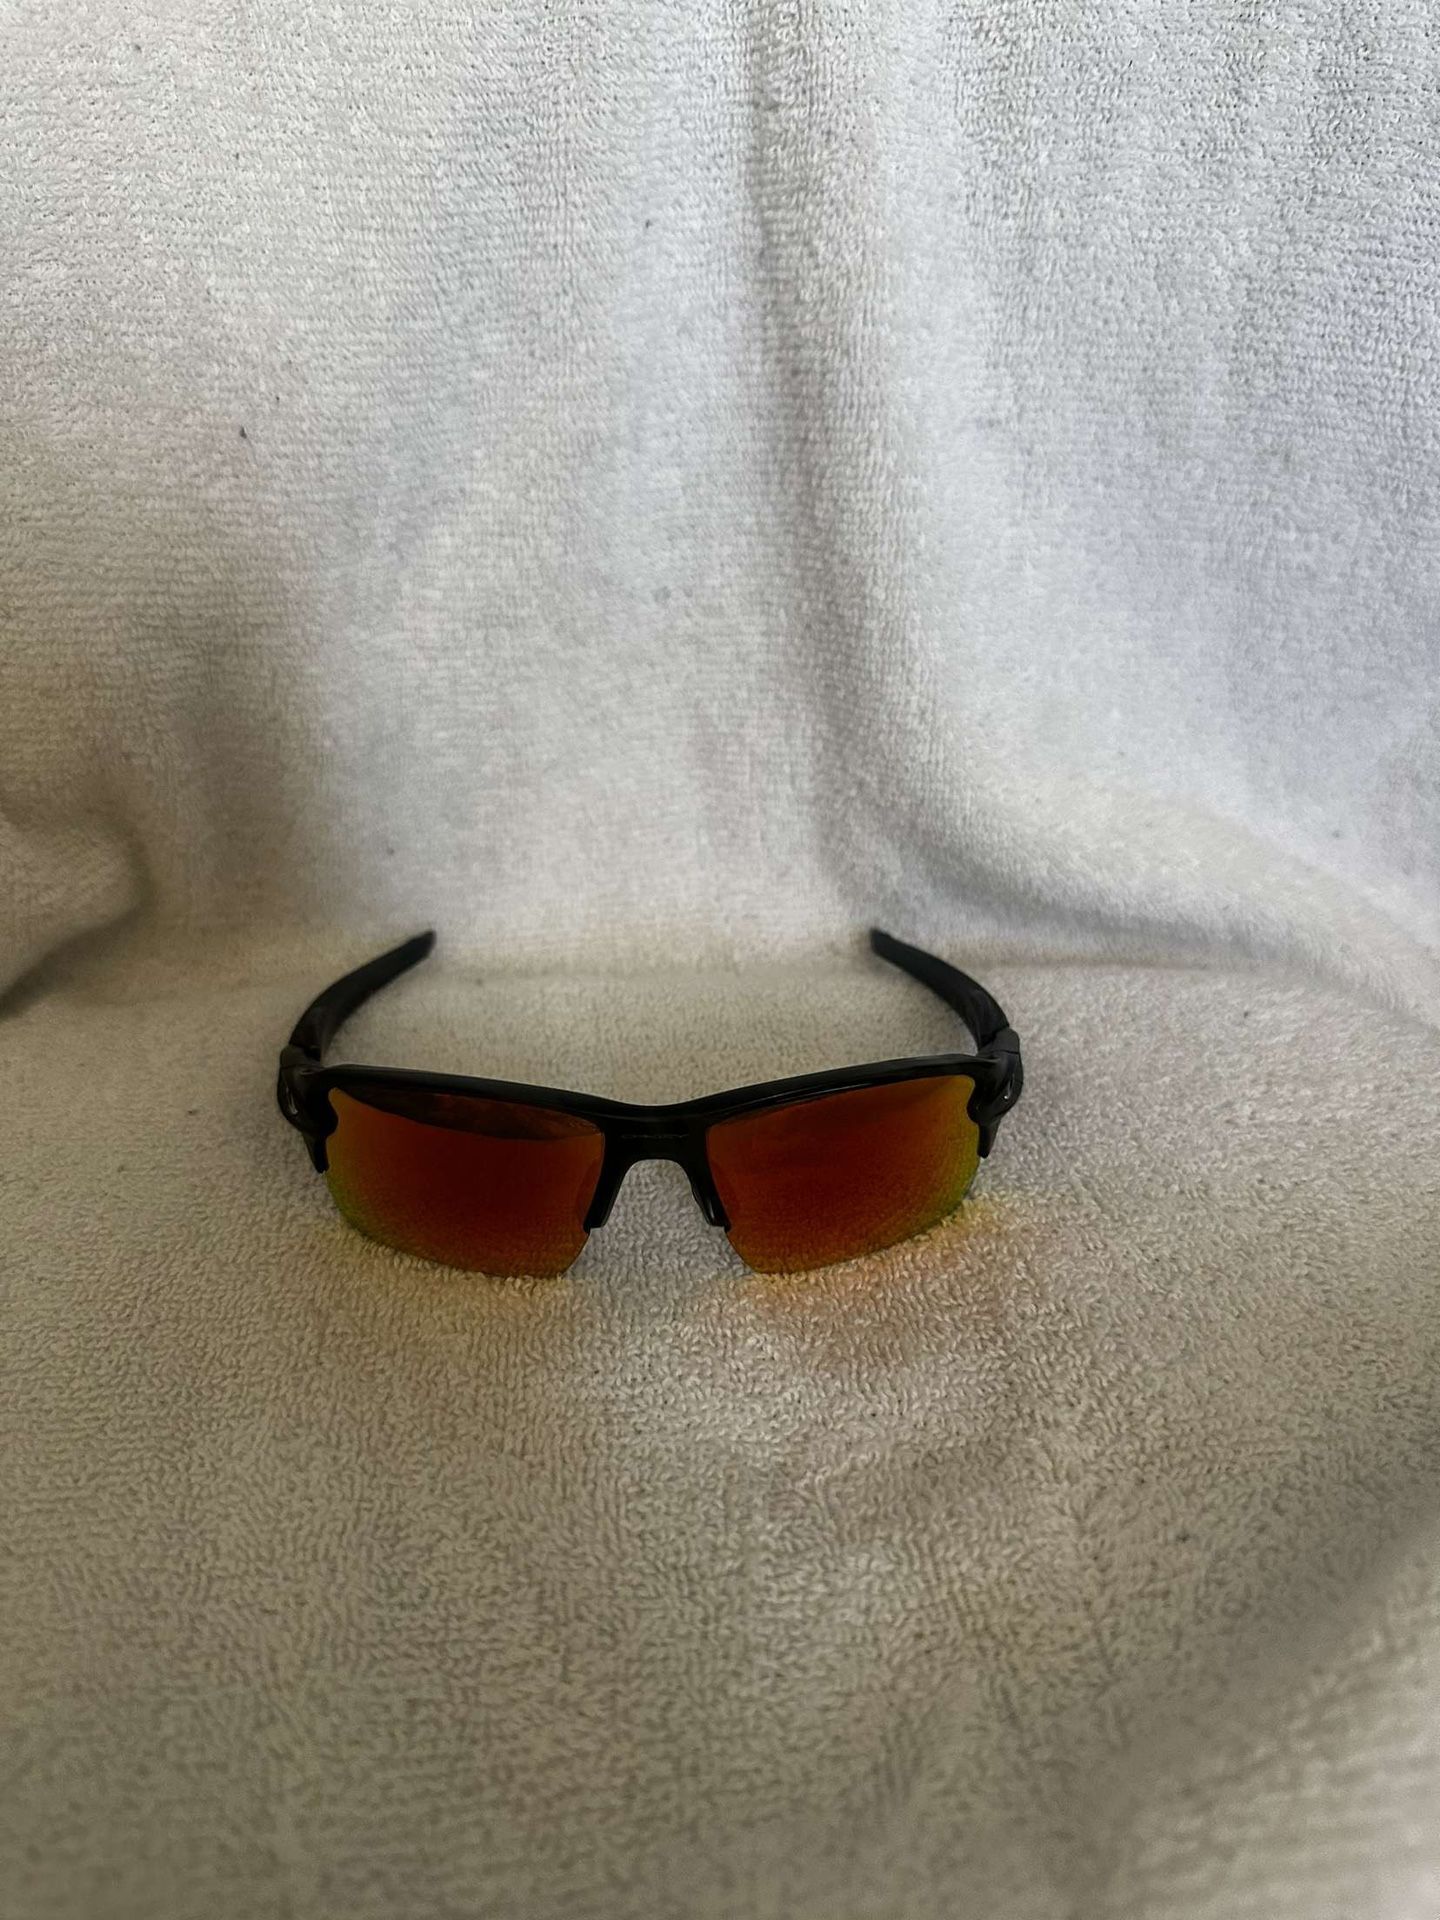 Oakley prizm polarized sunglasses